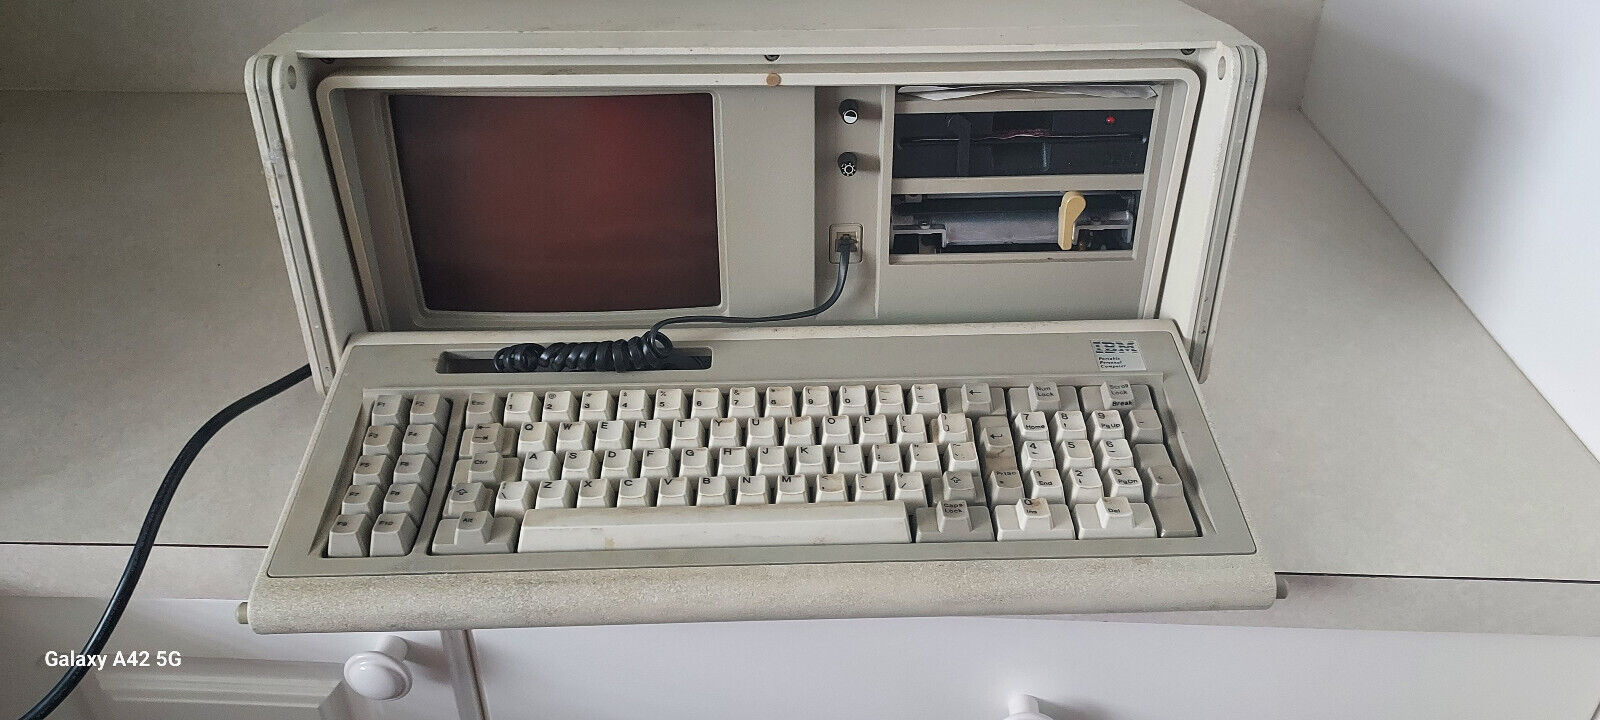 IBM PC Model 5155 Vintage Computer - Works great